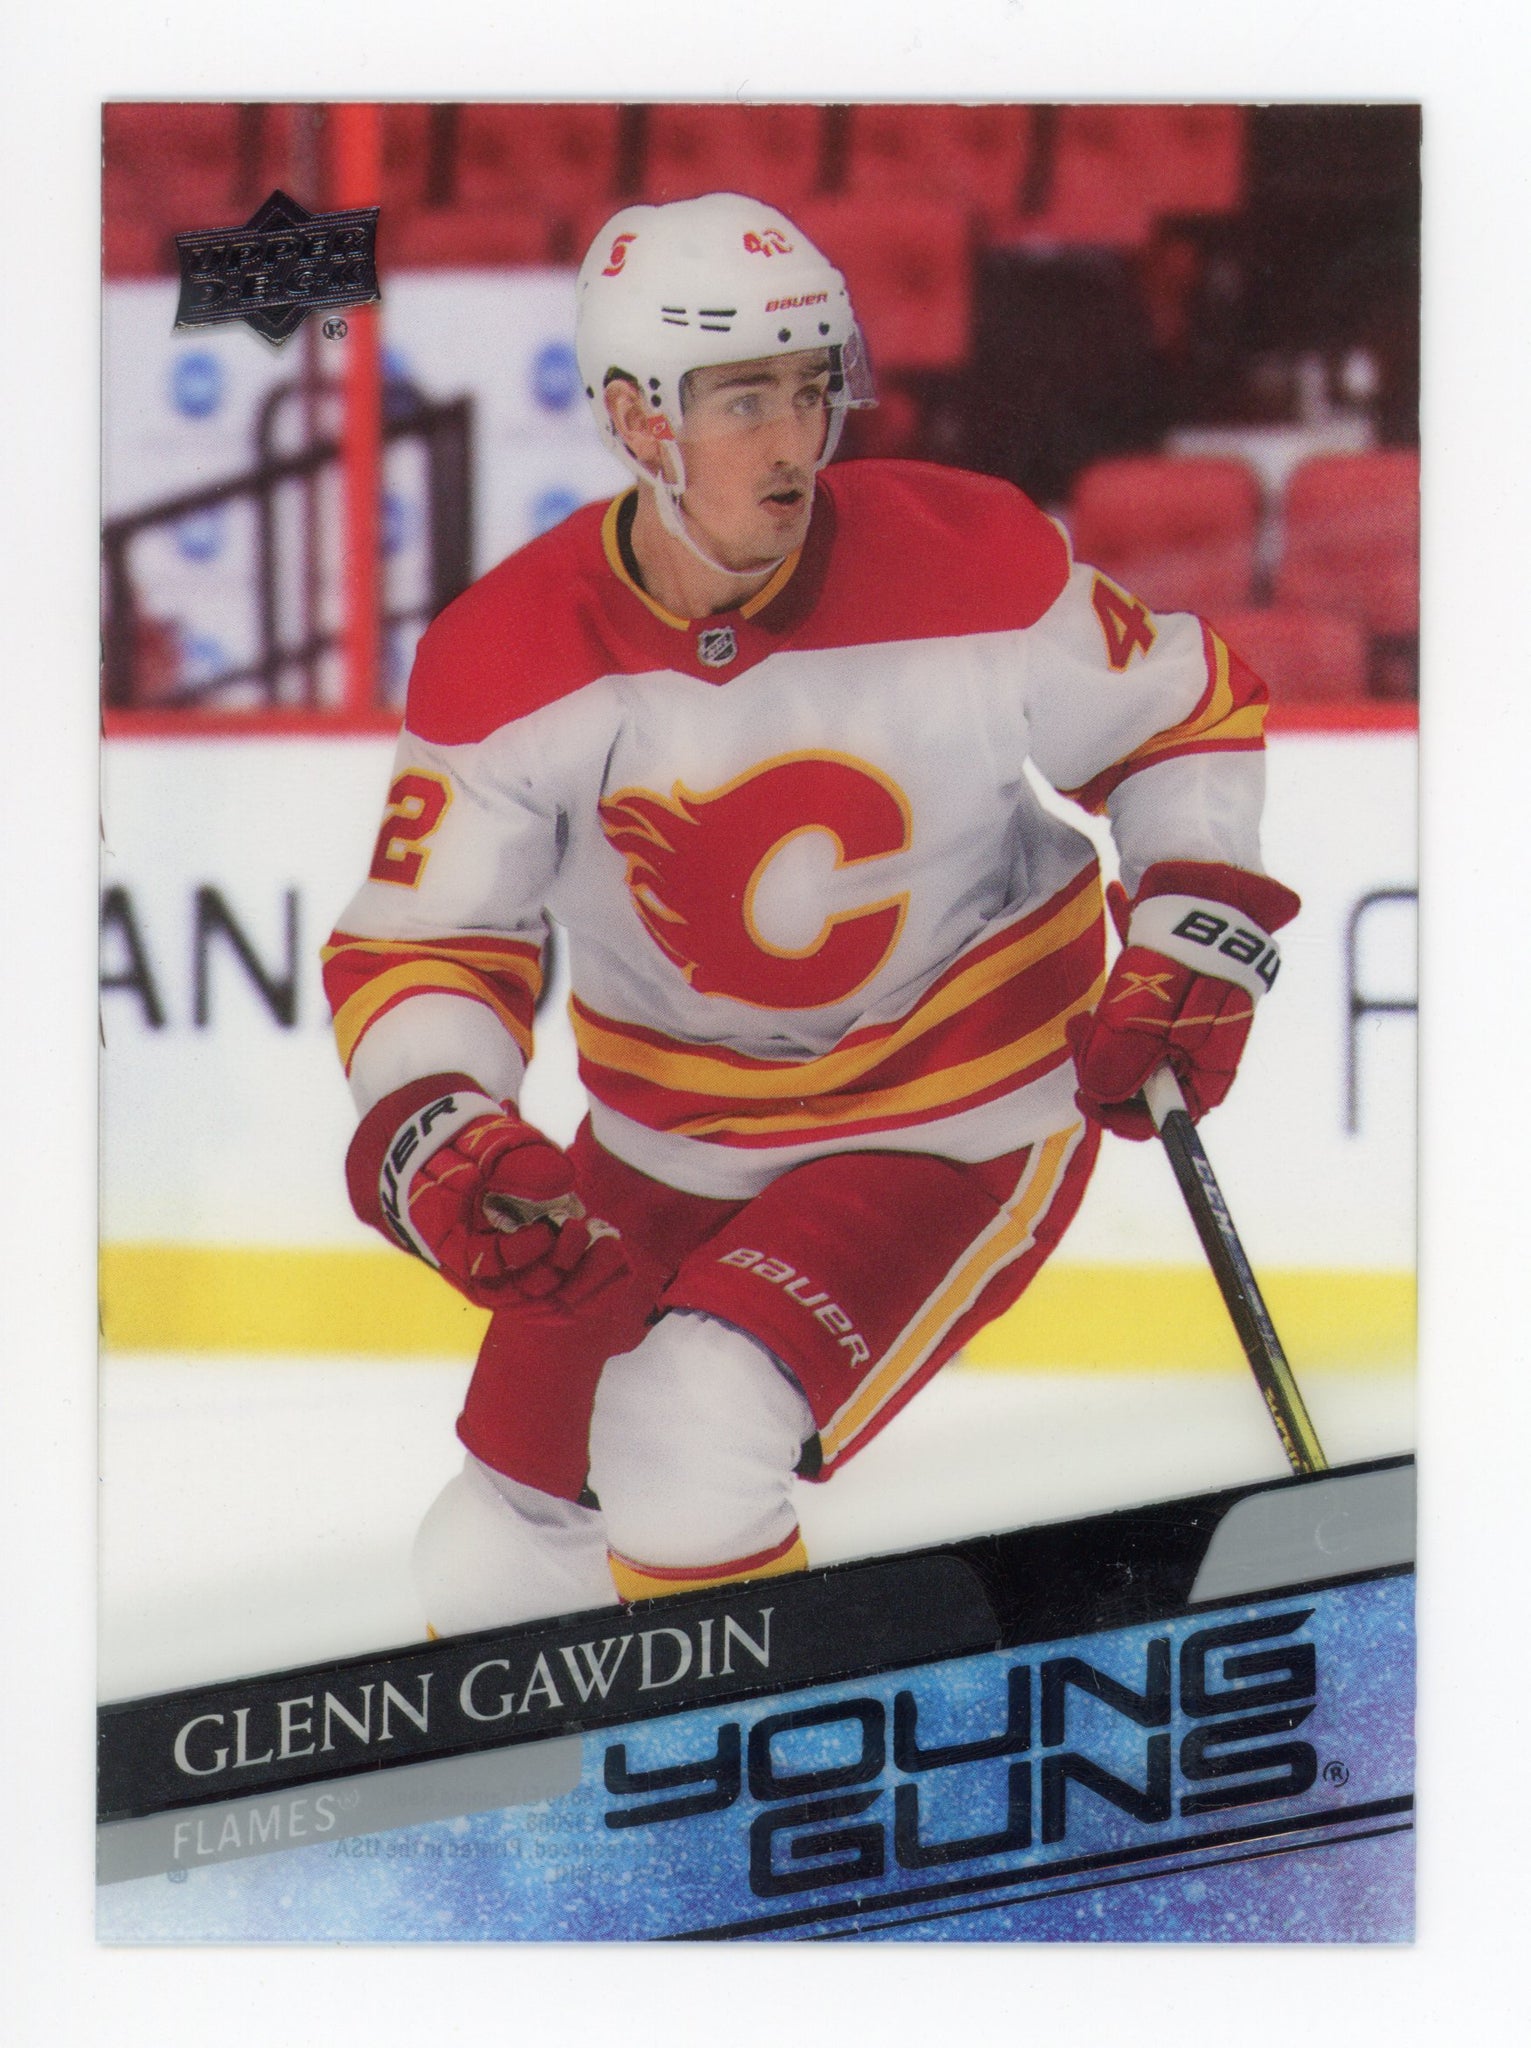 2020-2021 Glenn Gawdin Young Guns Acetate Upper Deck Extended Series Calgary Flames #726